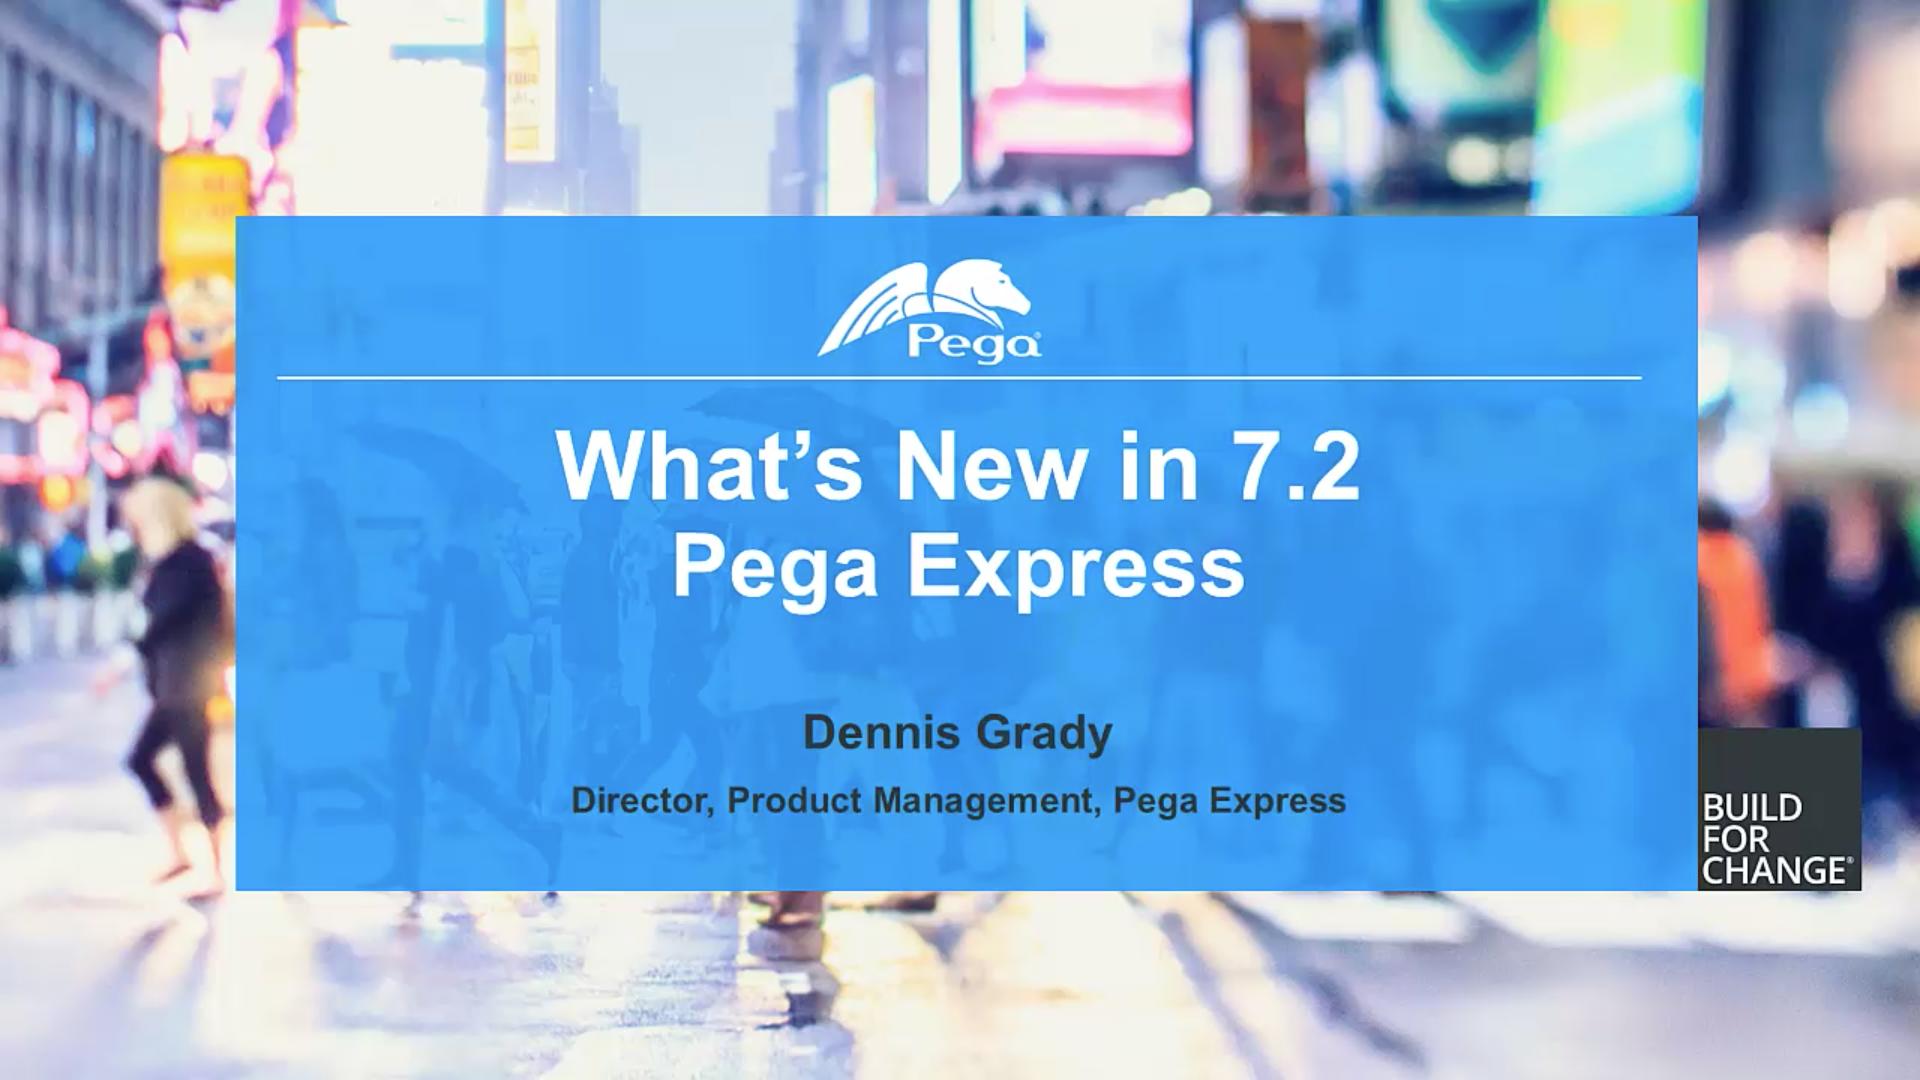 Pega 7.2 Update: What's New in Pega Express